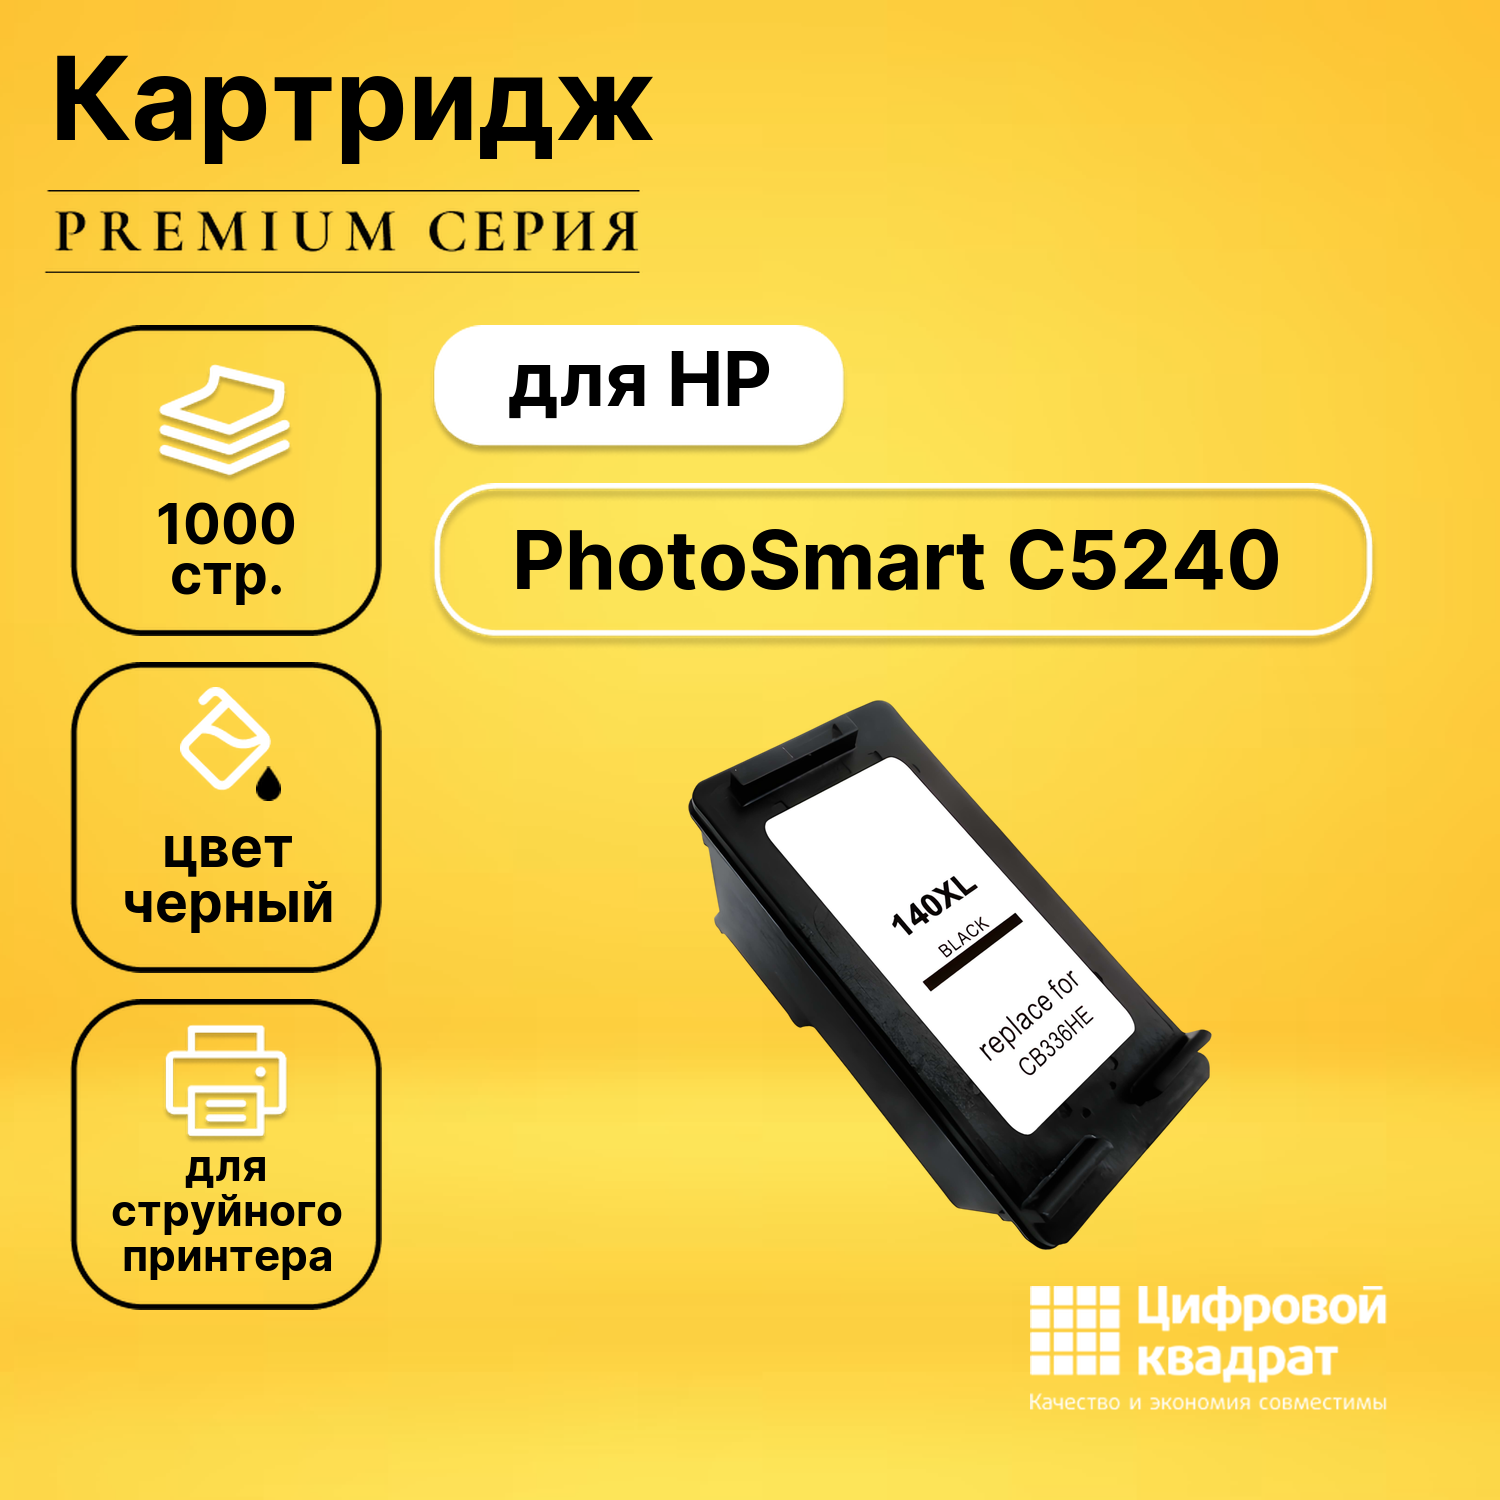 Картридж DS для HP PhotoSmart C5240 совместимый